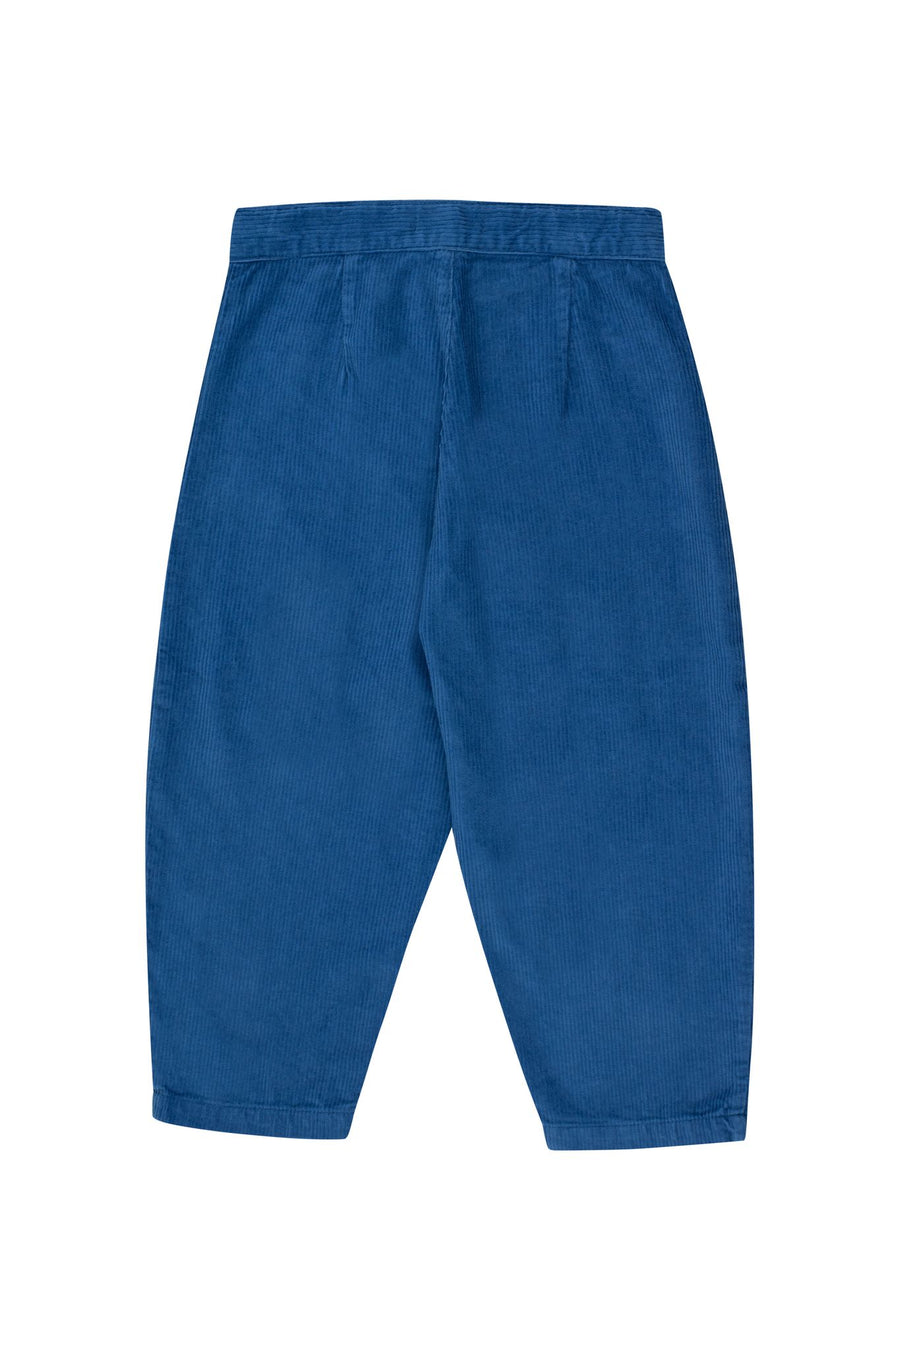 Tiny Cottons - corduroy pants - blue